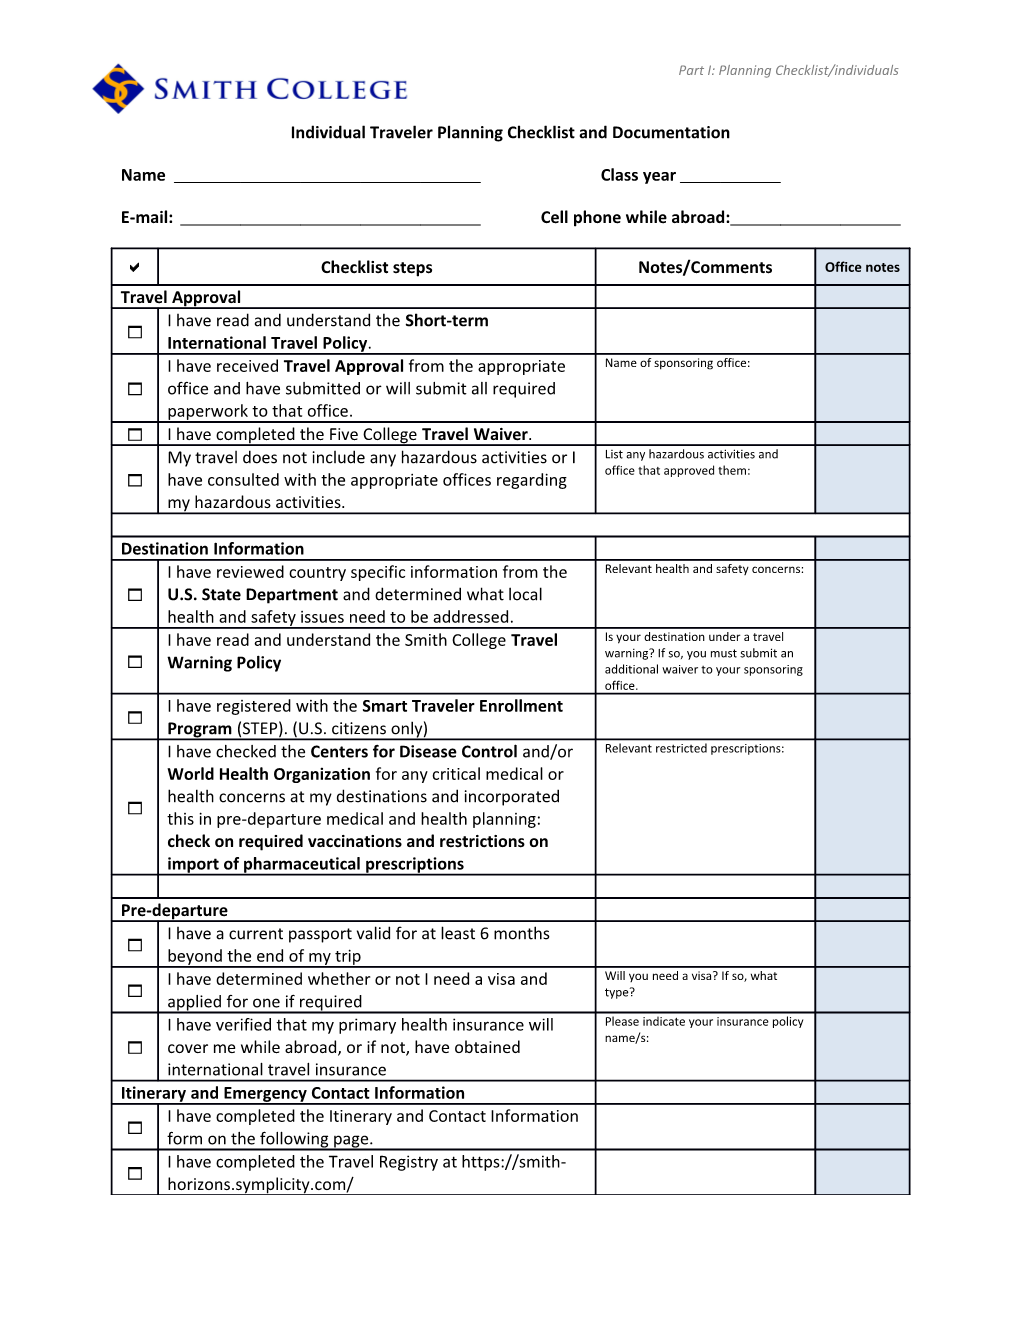 Individual Traveler Planning Checklist and Documentation